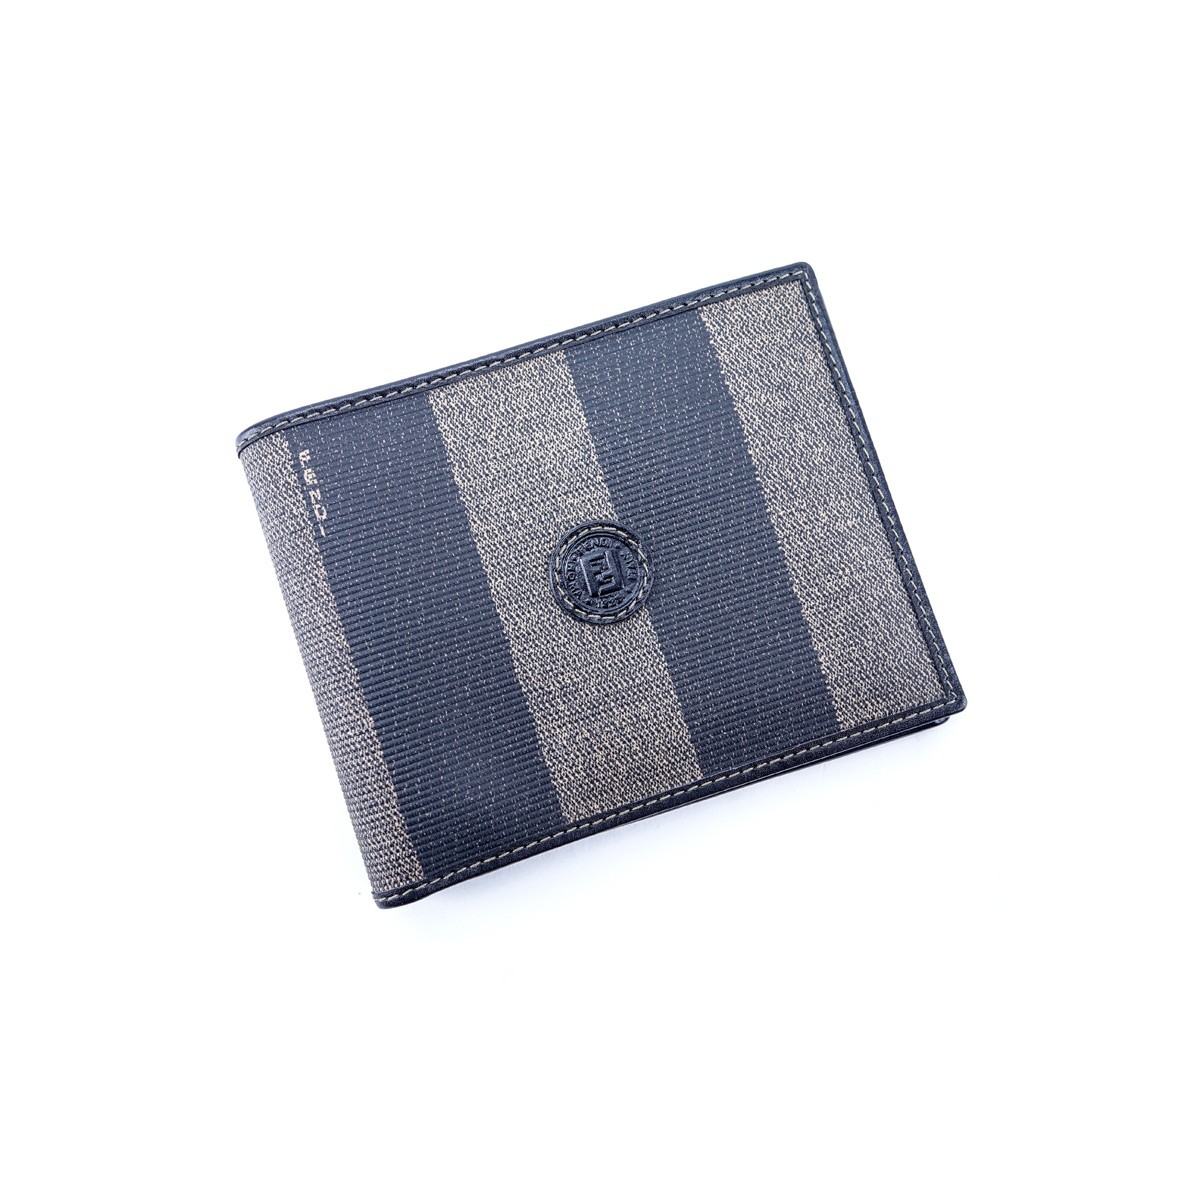 Fendi Black/Beige Striped Coated Canvas Bifold 3 Slot Wallet. Gold tone hardware.